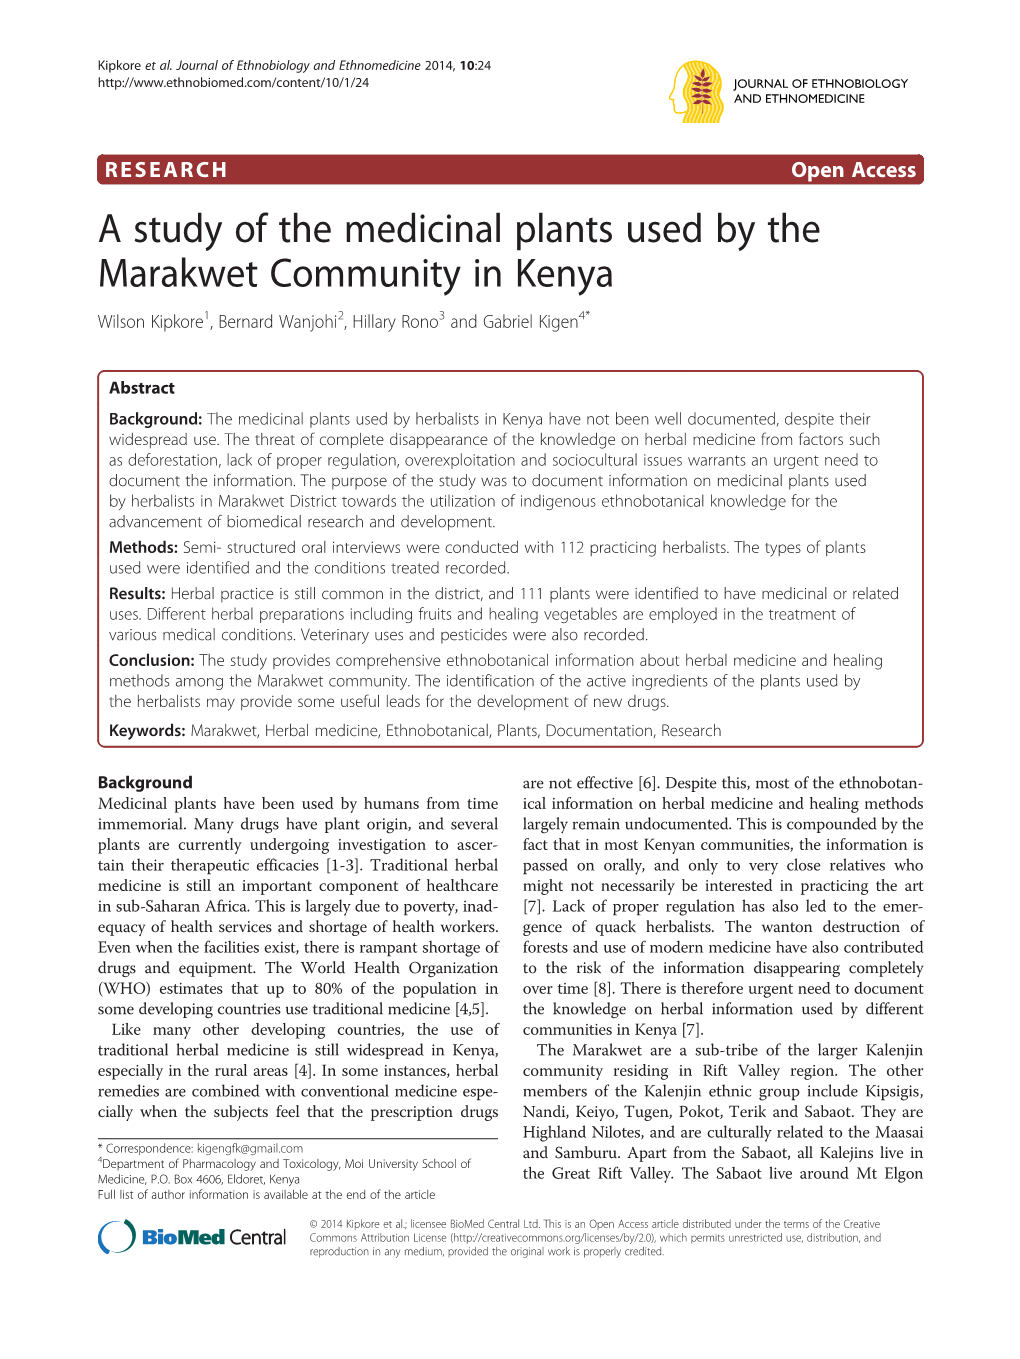 A Study of the Medicinal Plants Used by the Marakwet Community in Kenya Wilson Kipkore1, Bernard Wanjohi2, Hillary Rono3 and Gabriel Kigen4*